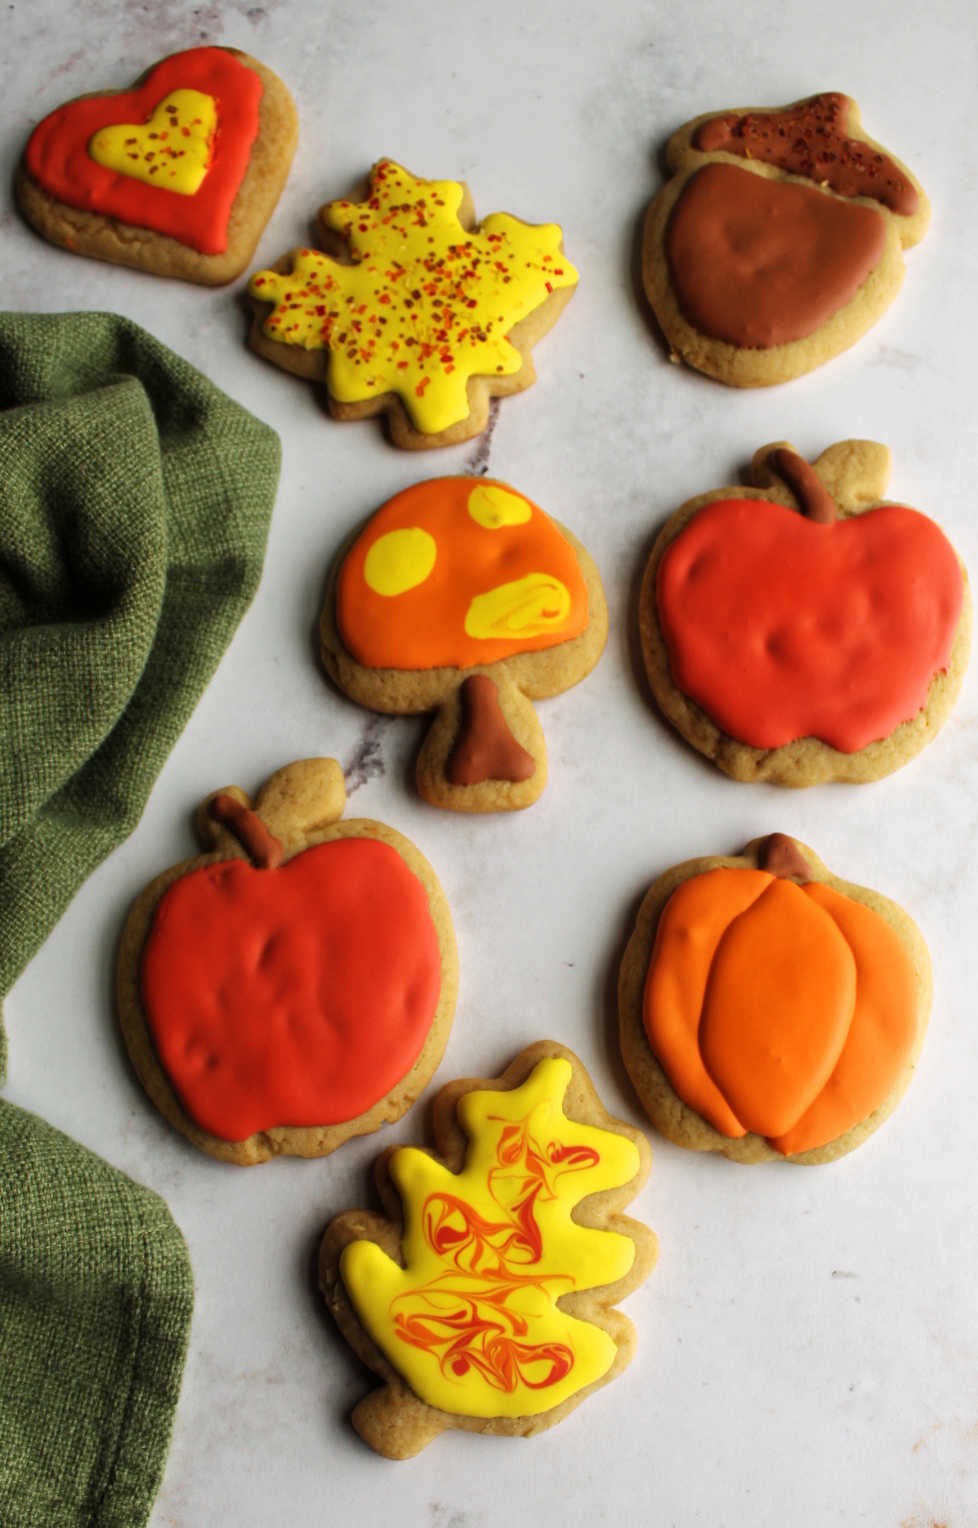 Iced cinnamon brown sugar cookies in shapes of pumpkins, apples, leaves, a mushroom and a heart.